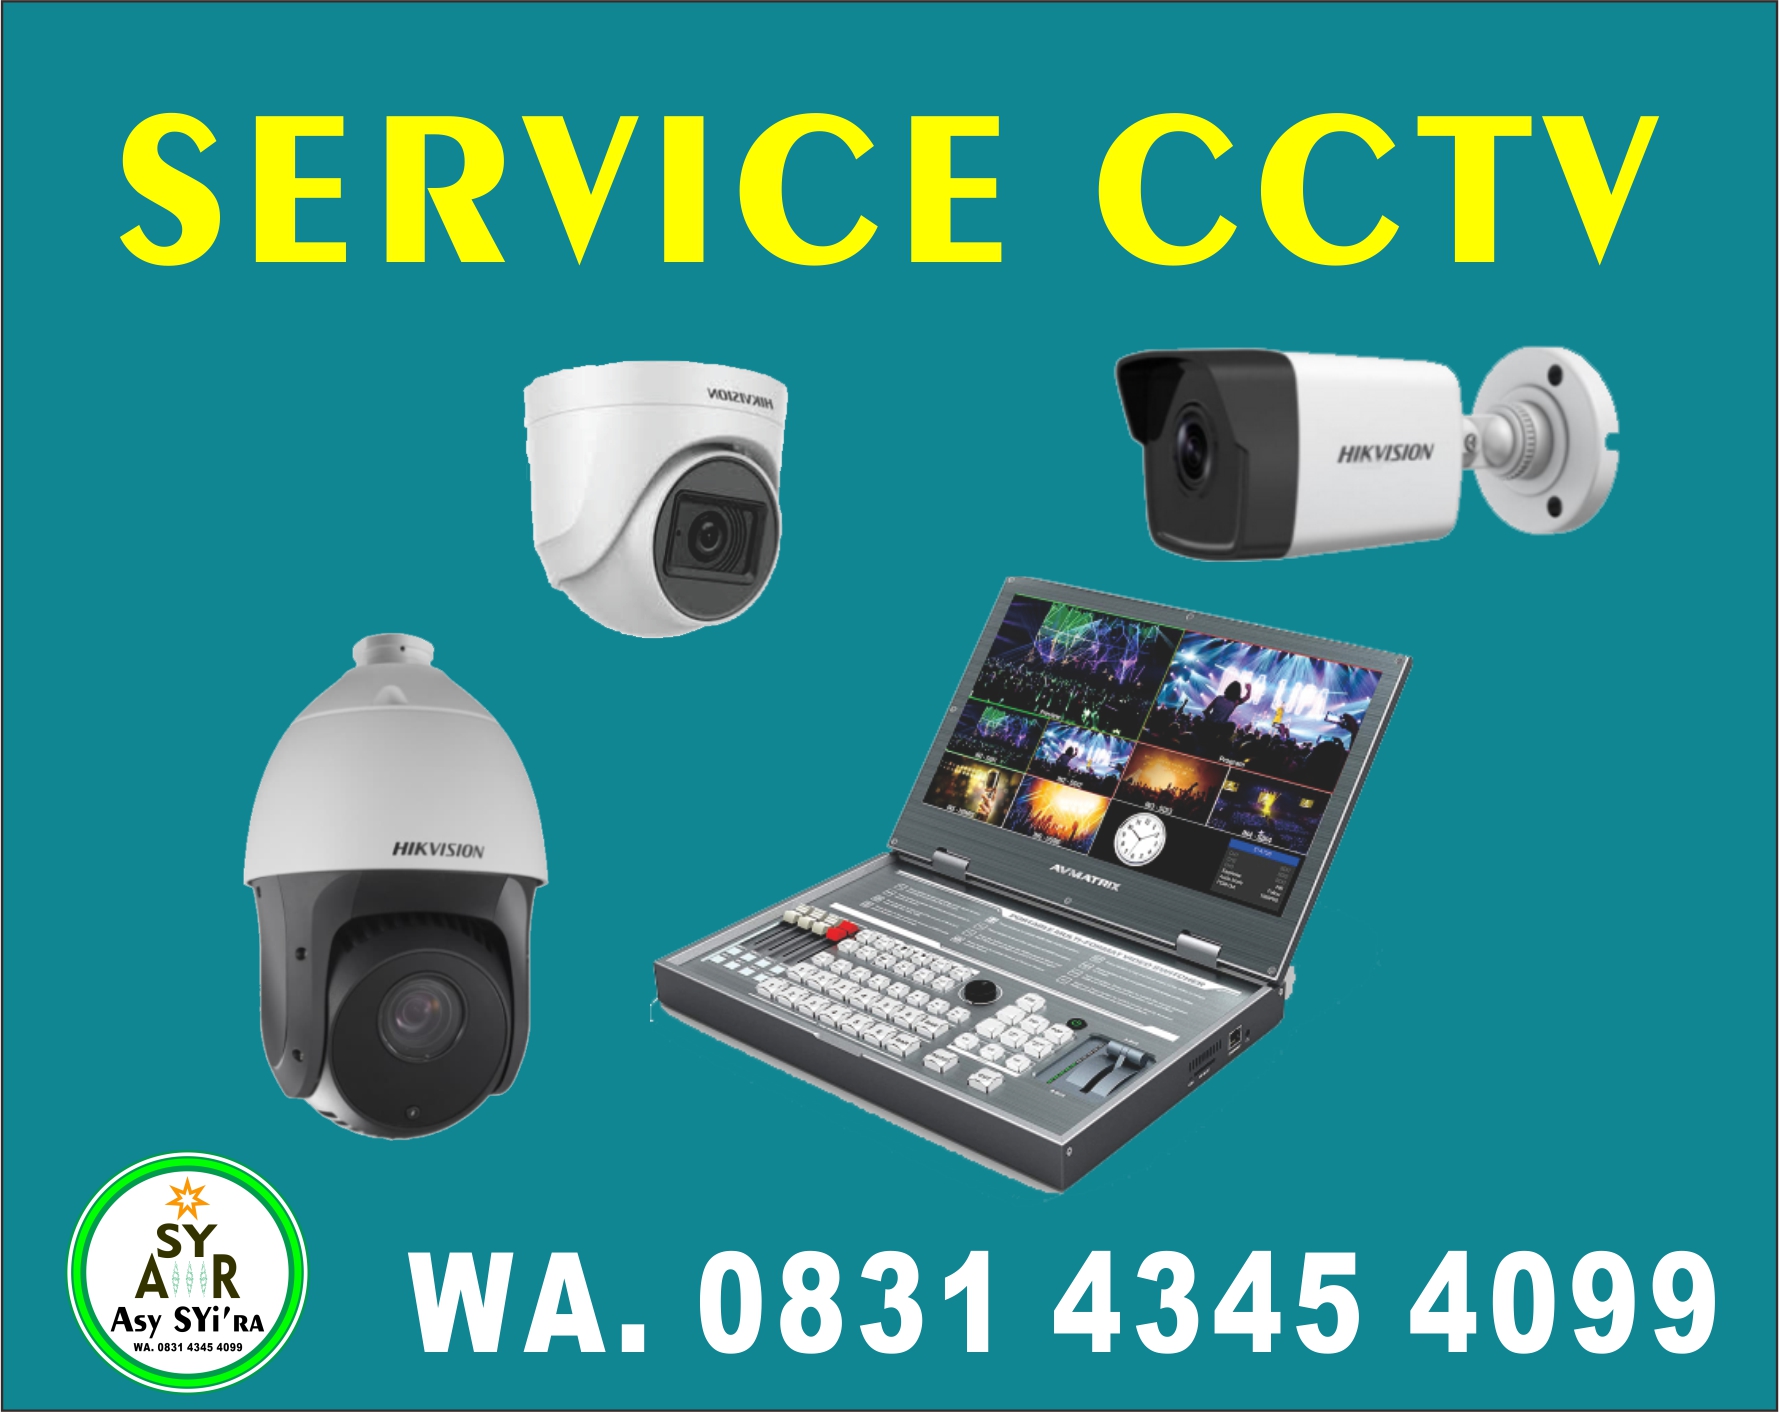 SERVICE CCTV